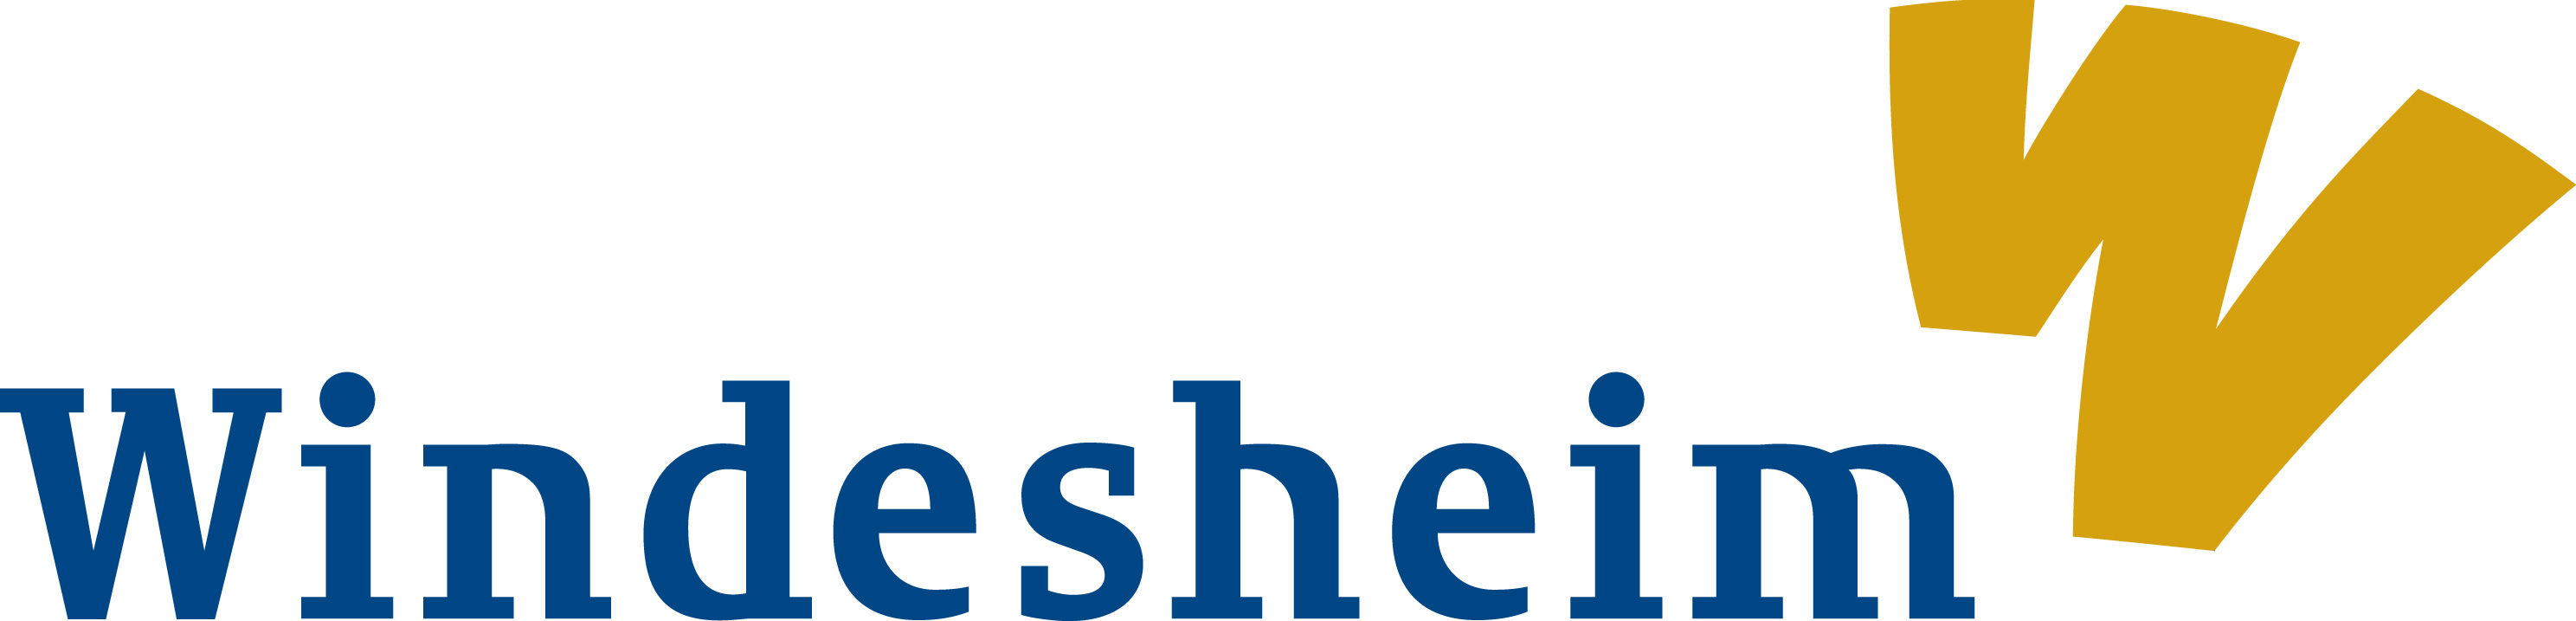 Windesheim Logo photo - 1